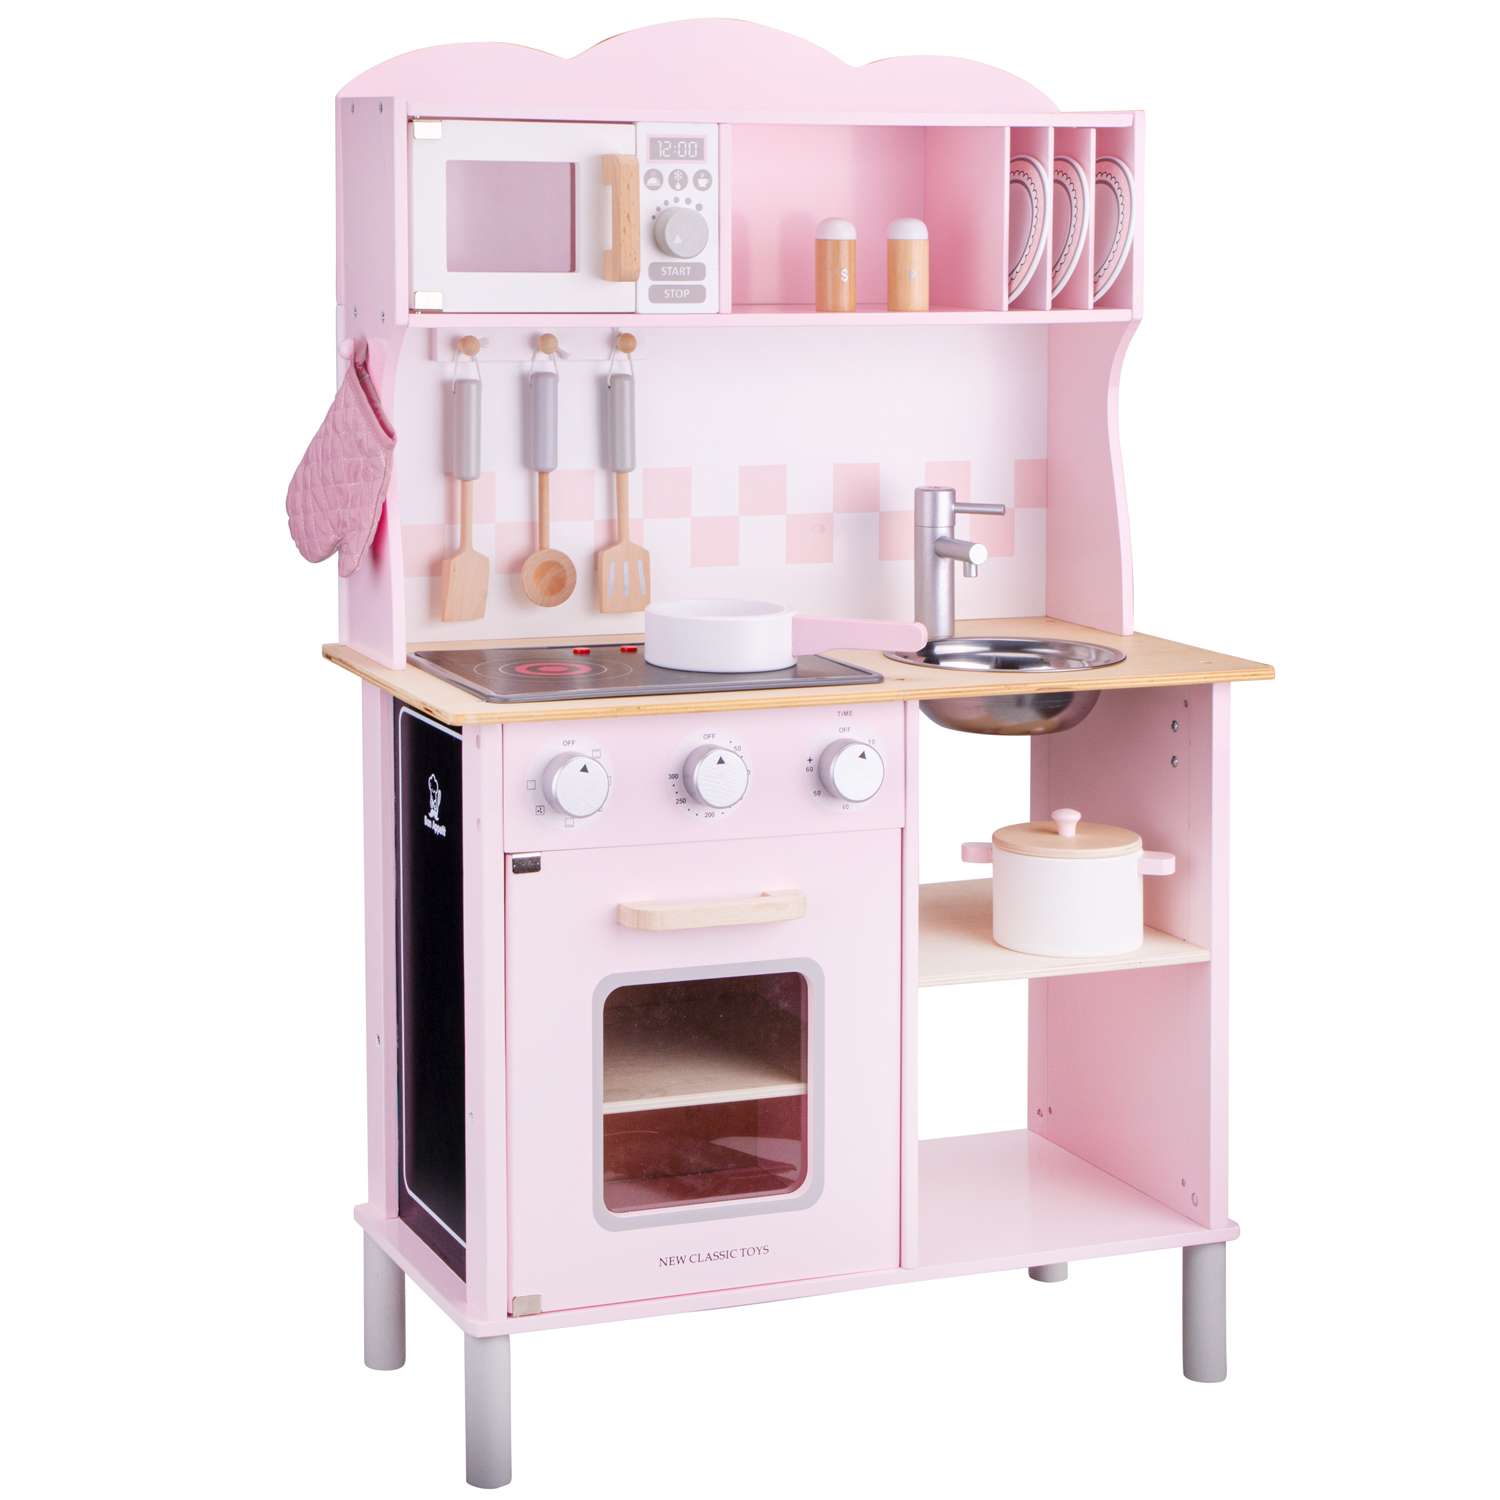 Кухня New Classic Toys розовая 100 см - фото 2